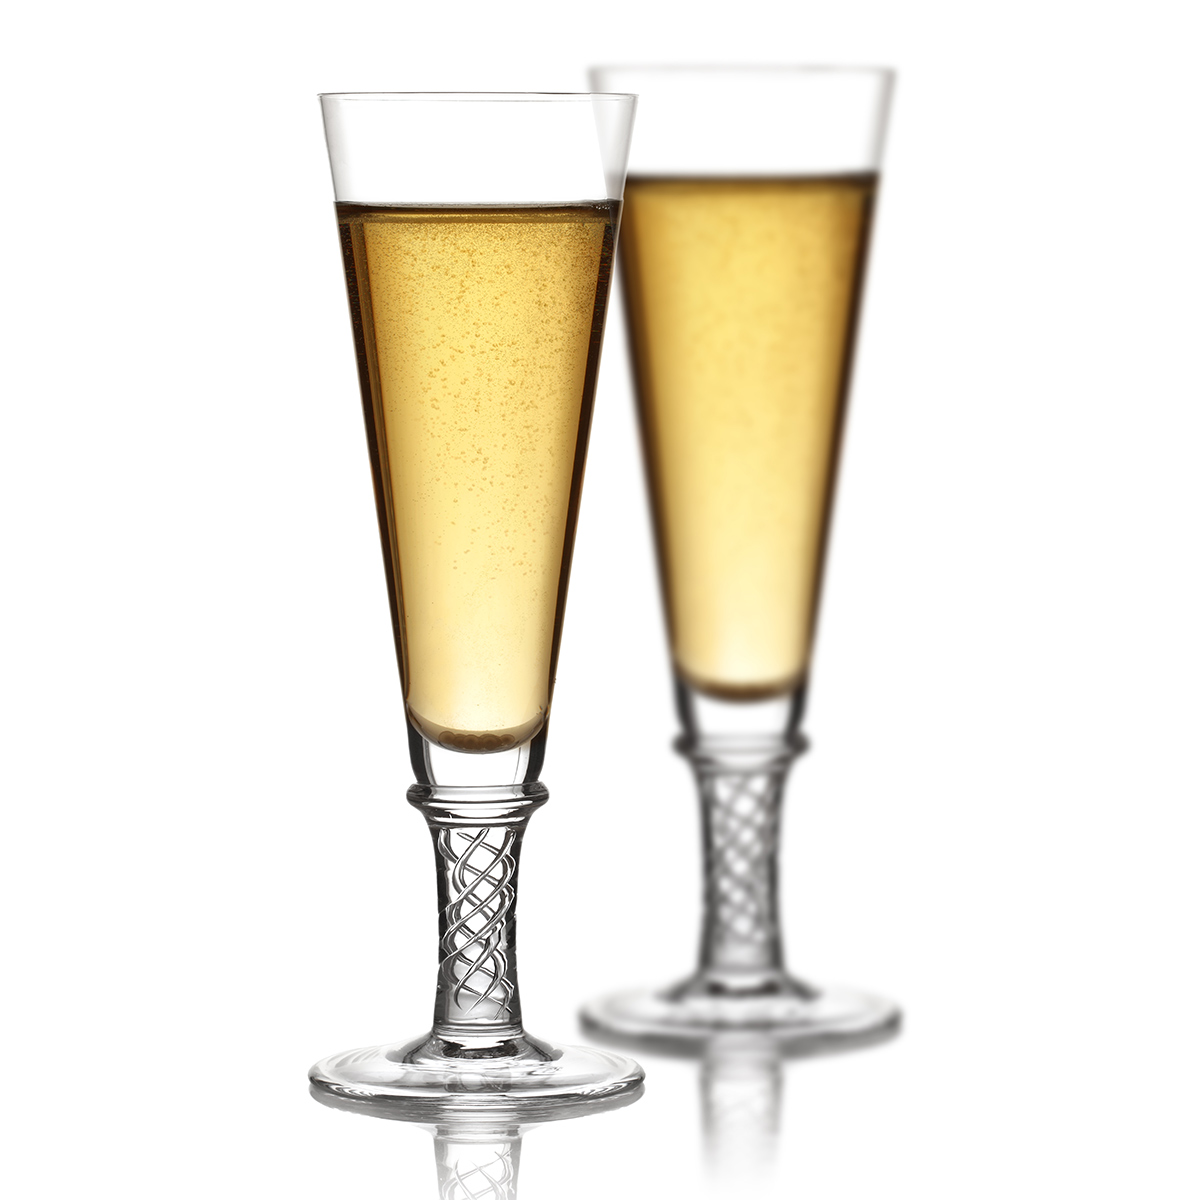 2 Jakobiten Champagnergläser / Sektgläser - Kristallglas aus Schottland